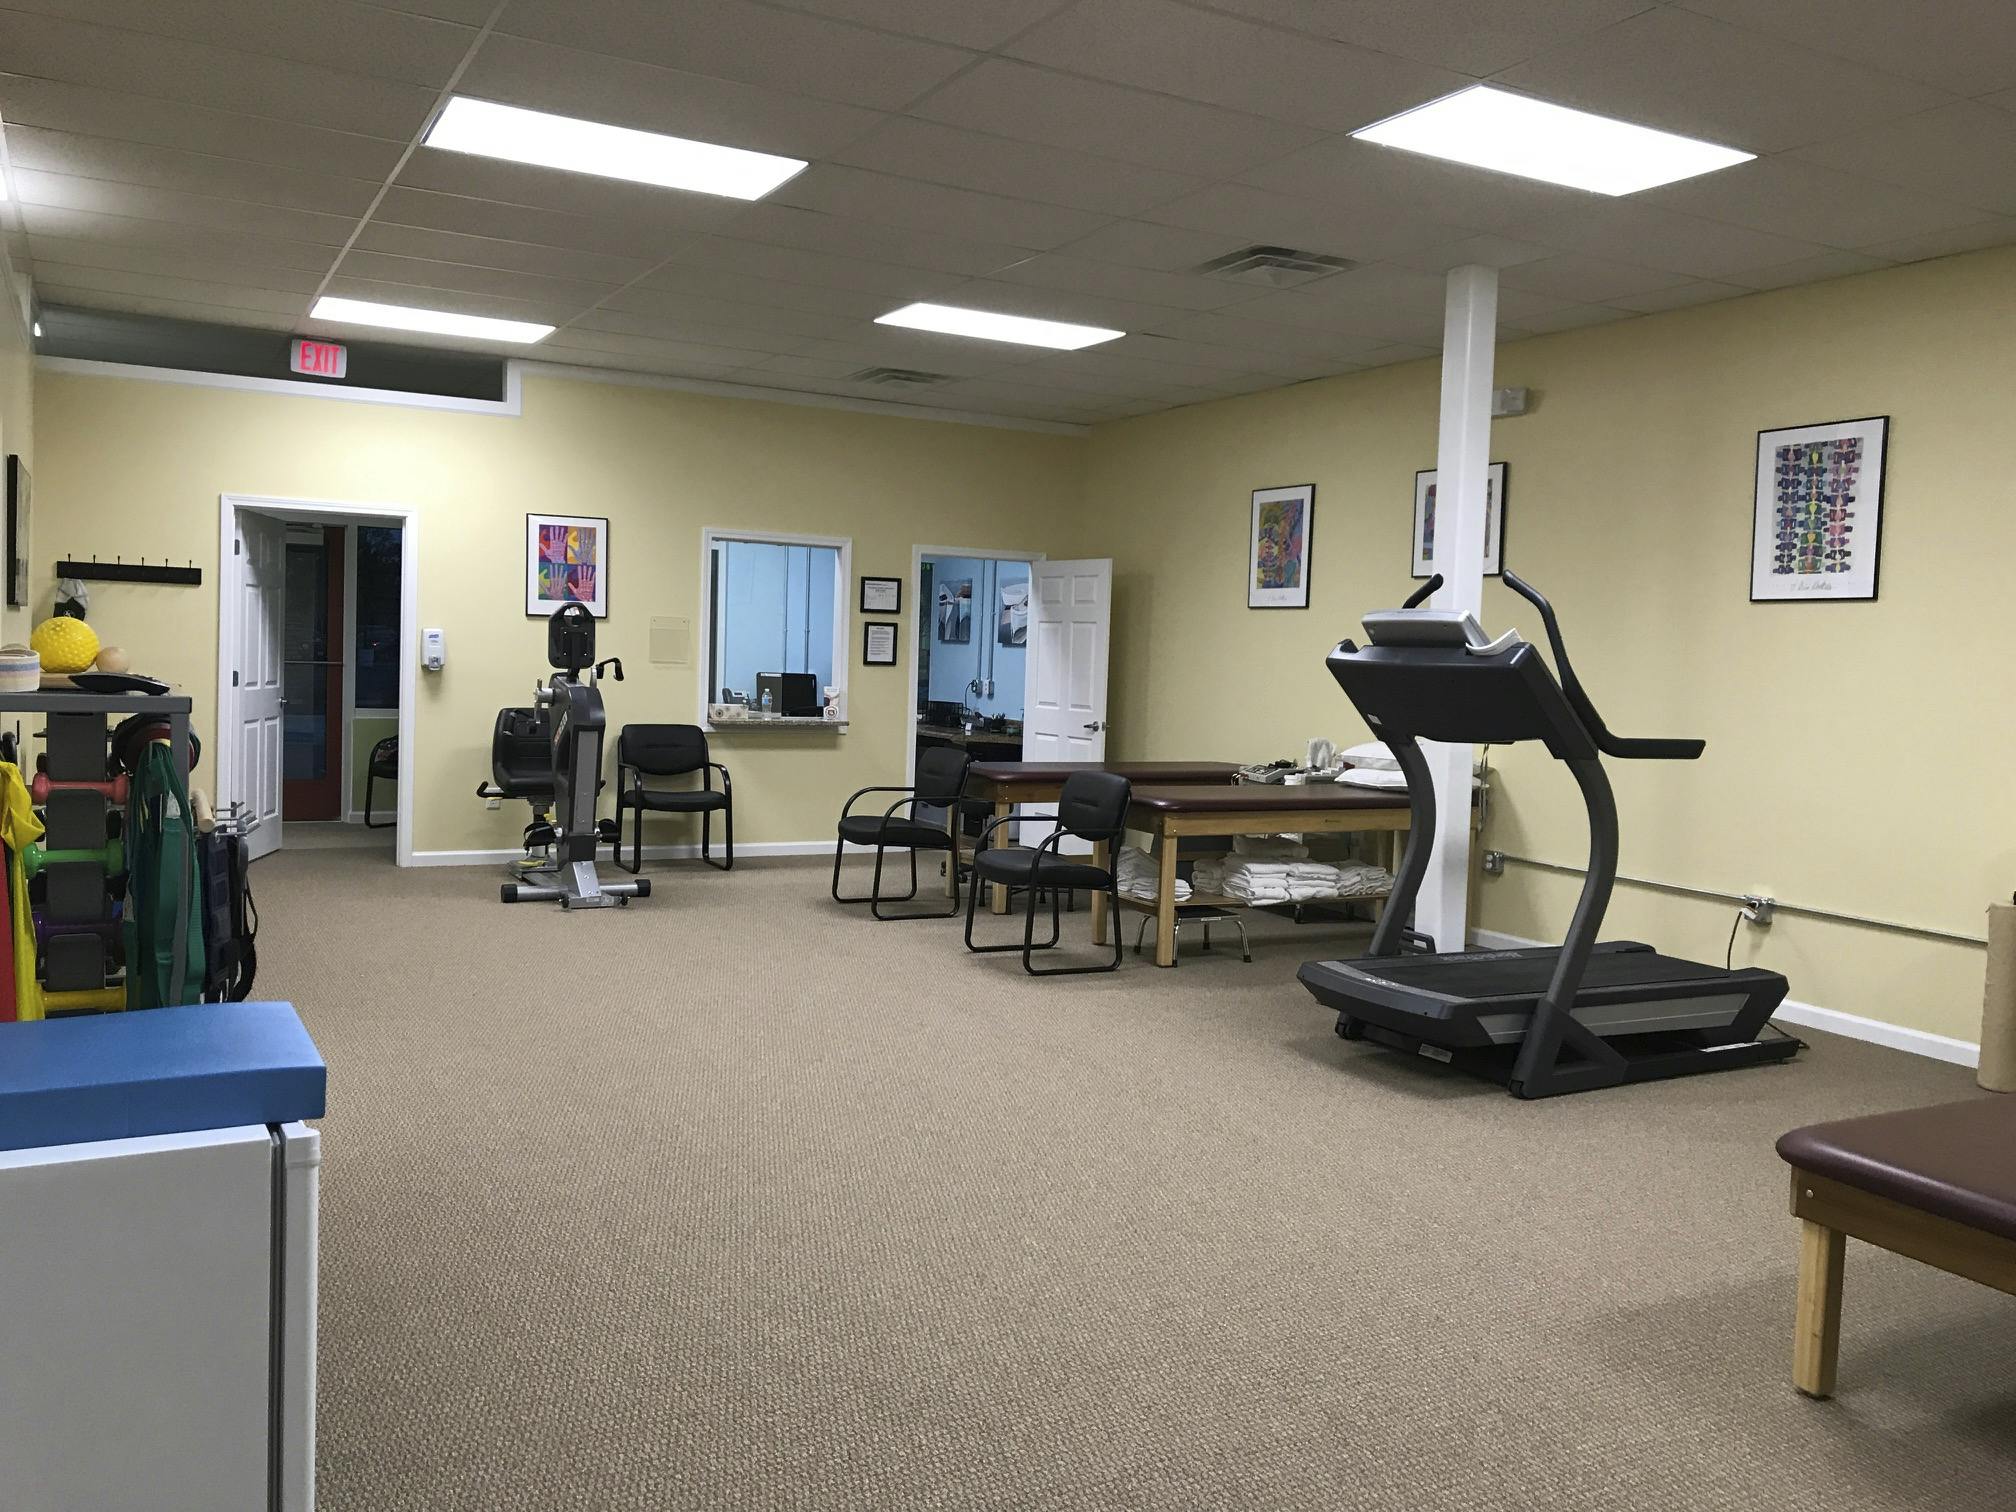 Professional Rehabilitation Services | Physical Therapy | Prince Creek Publix Village Shops | Murrells Inlet SC